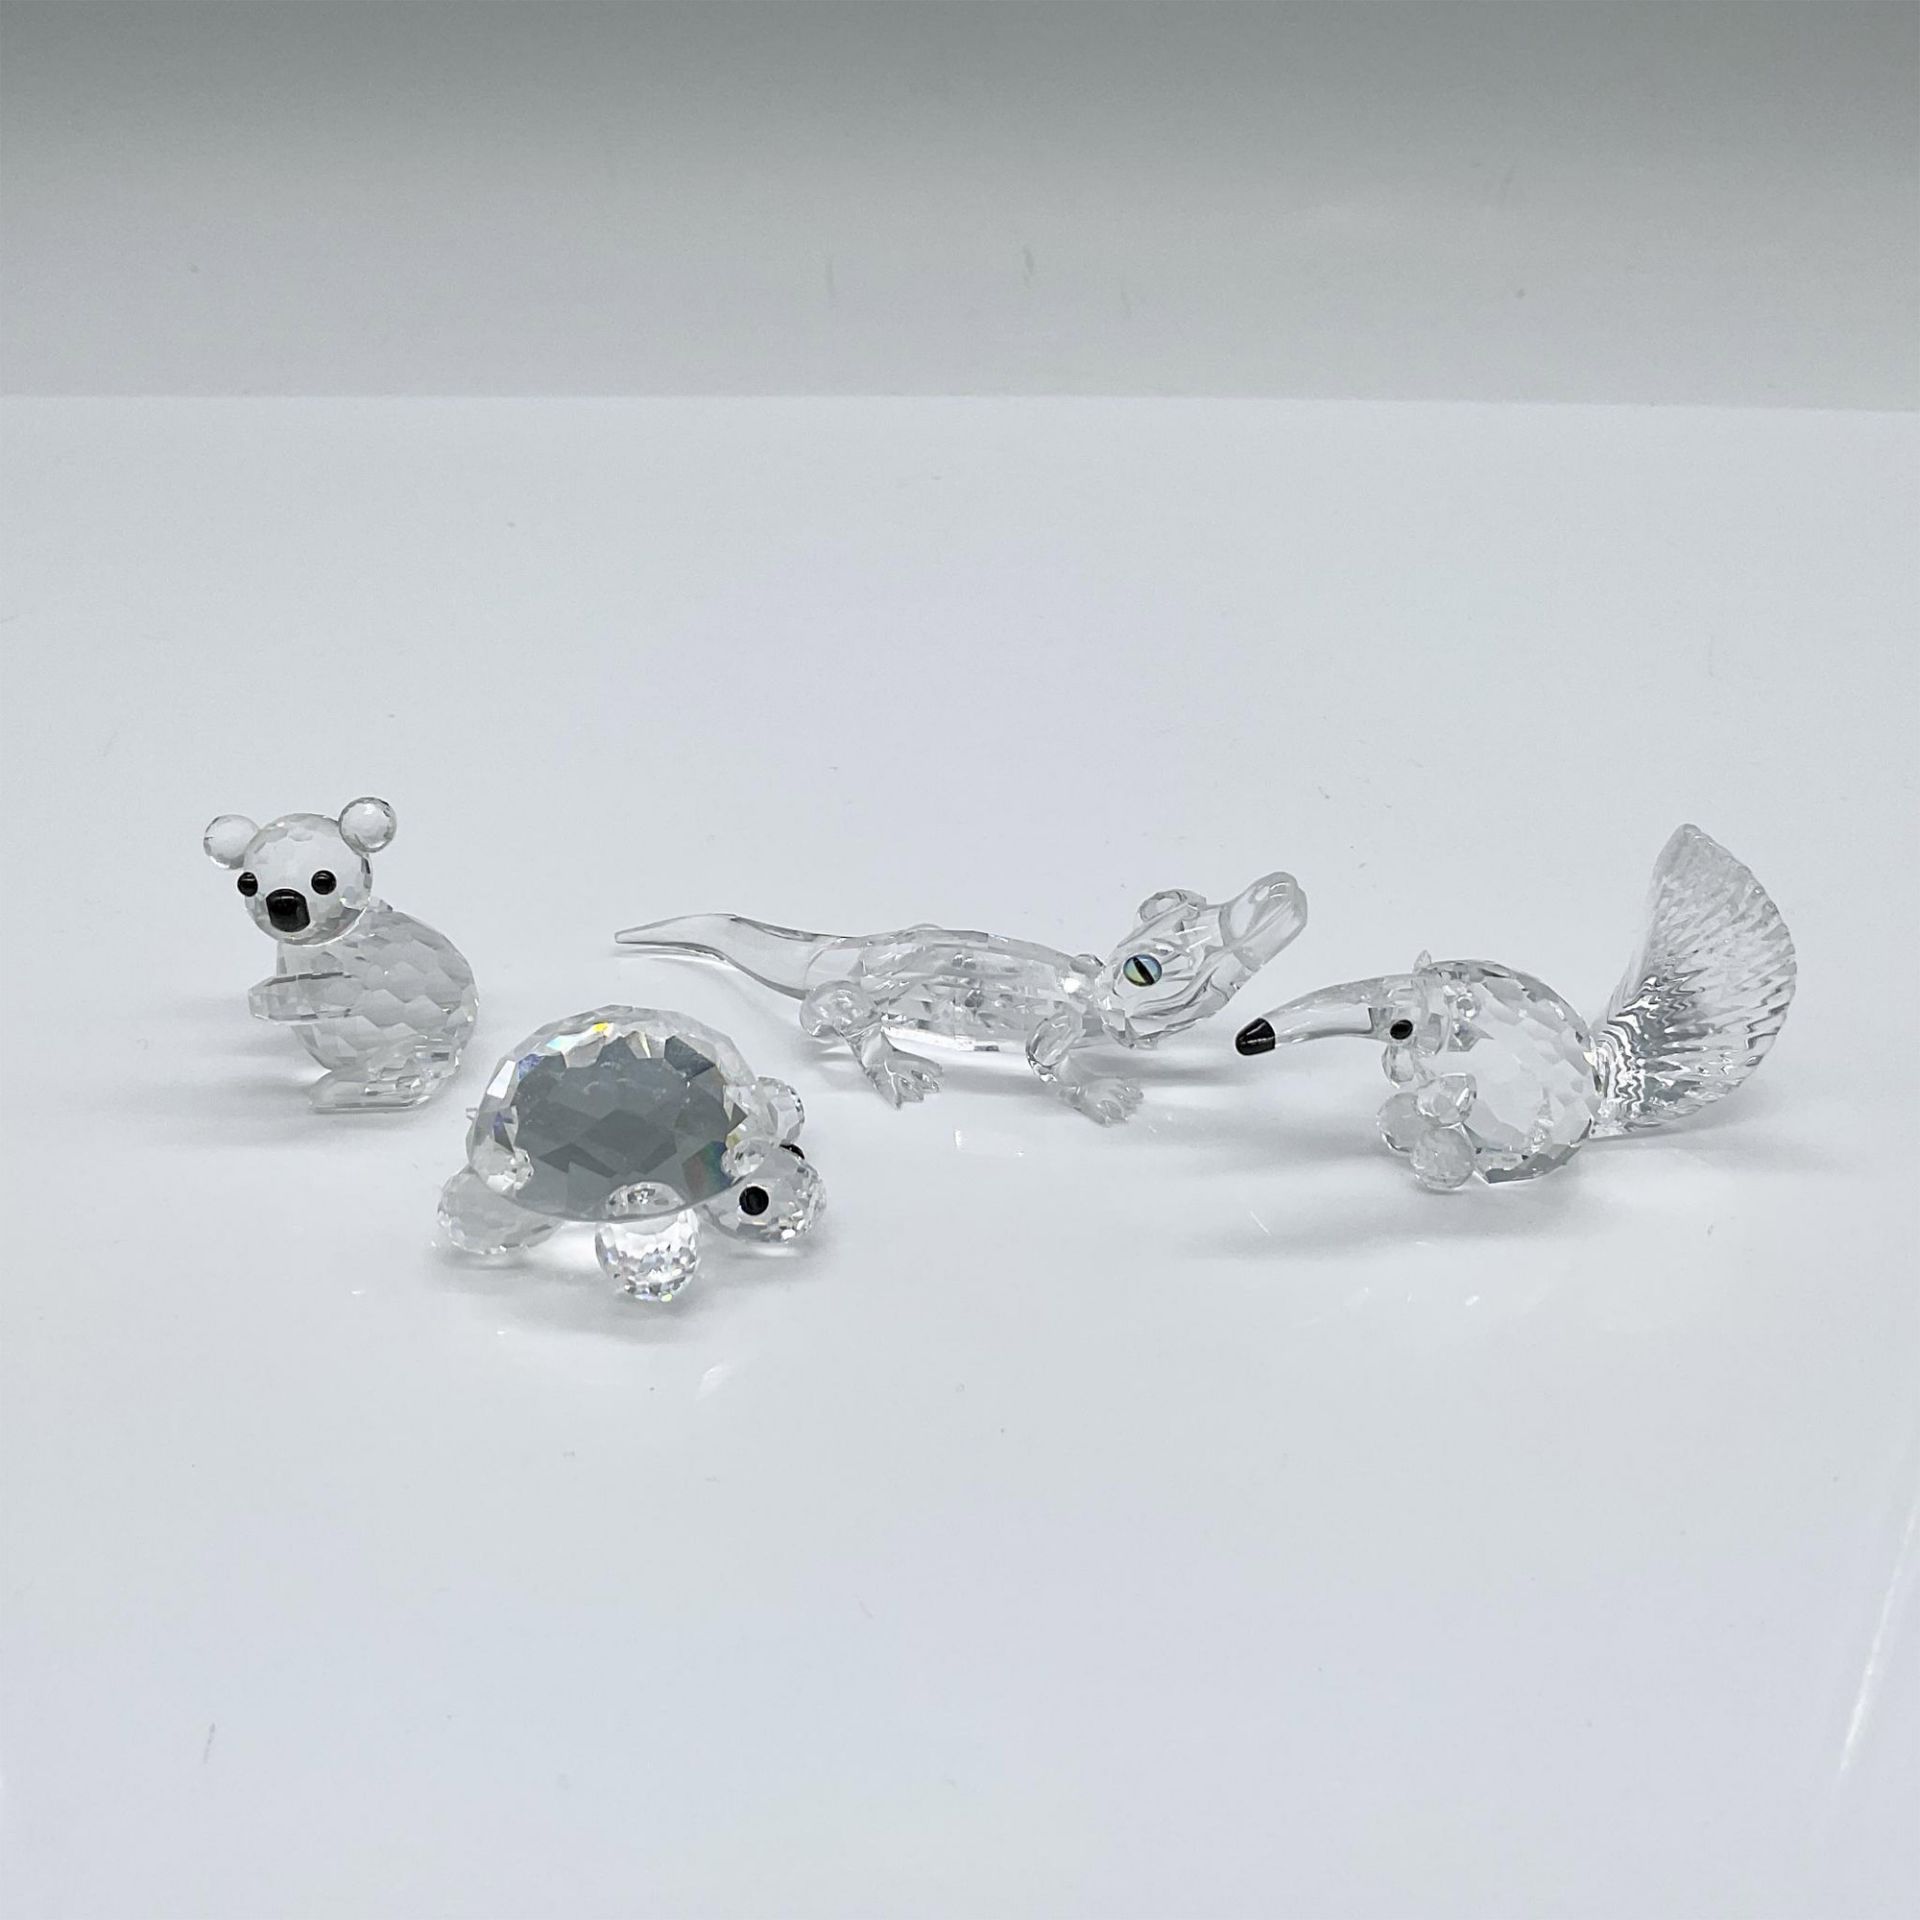 4pc Swarovski Crystal Endangered Species Figurines